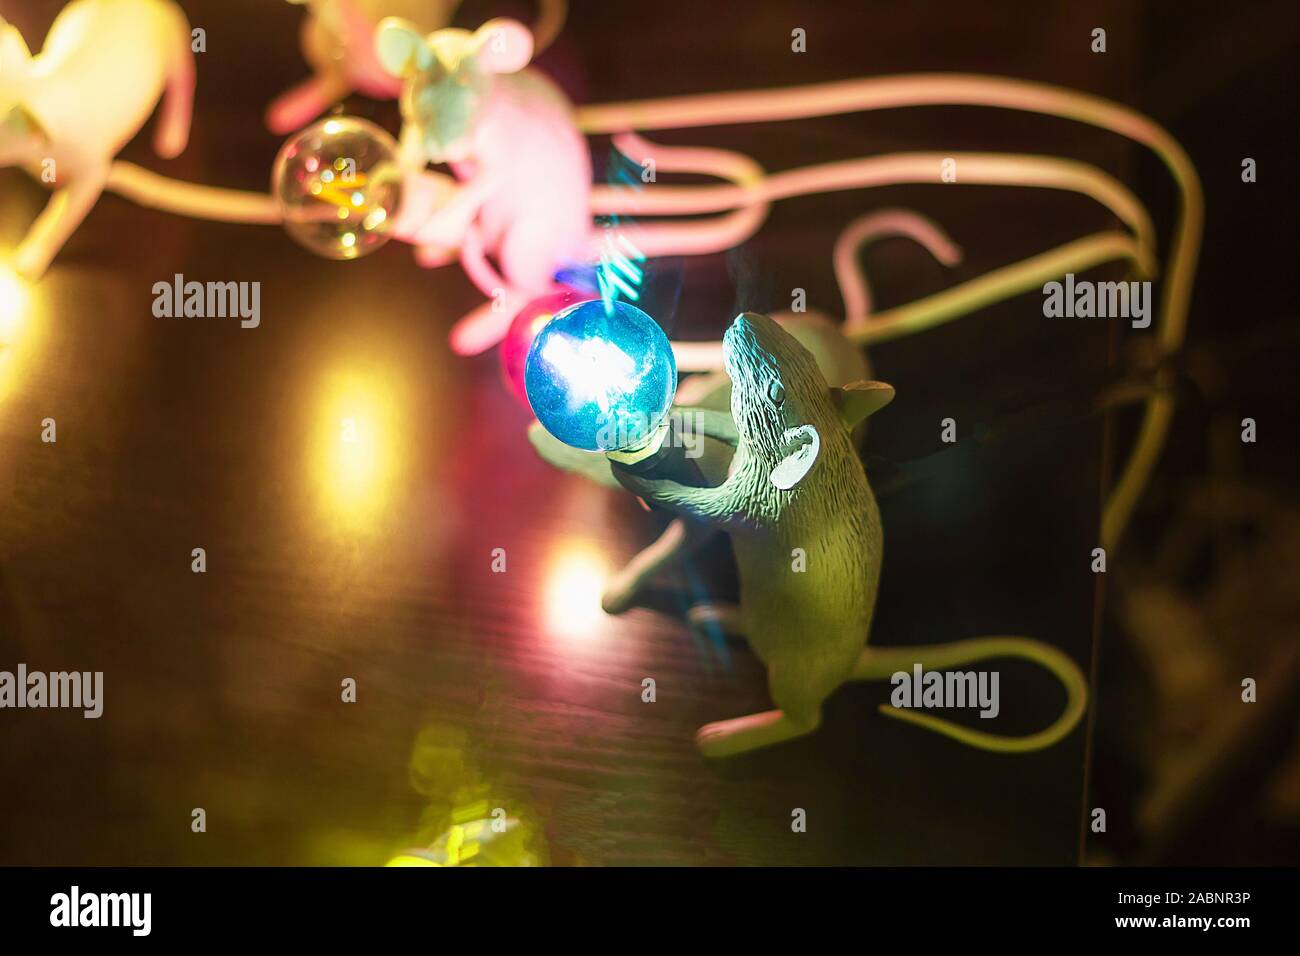 Dekorative Lampe in Form einer Ratte. Jahr der Ratte. Lampe Laterne design  Stockfotografie - Alamy